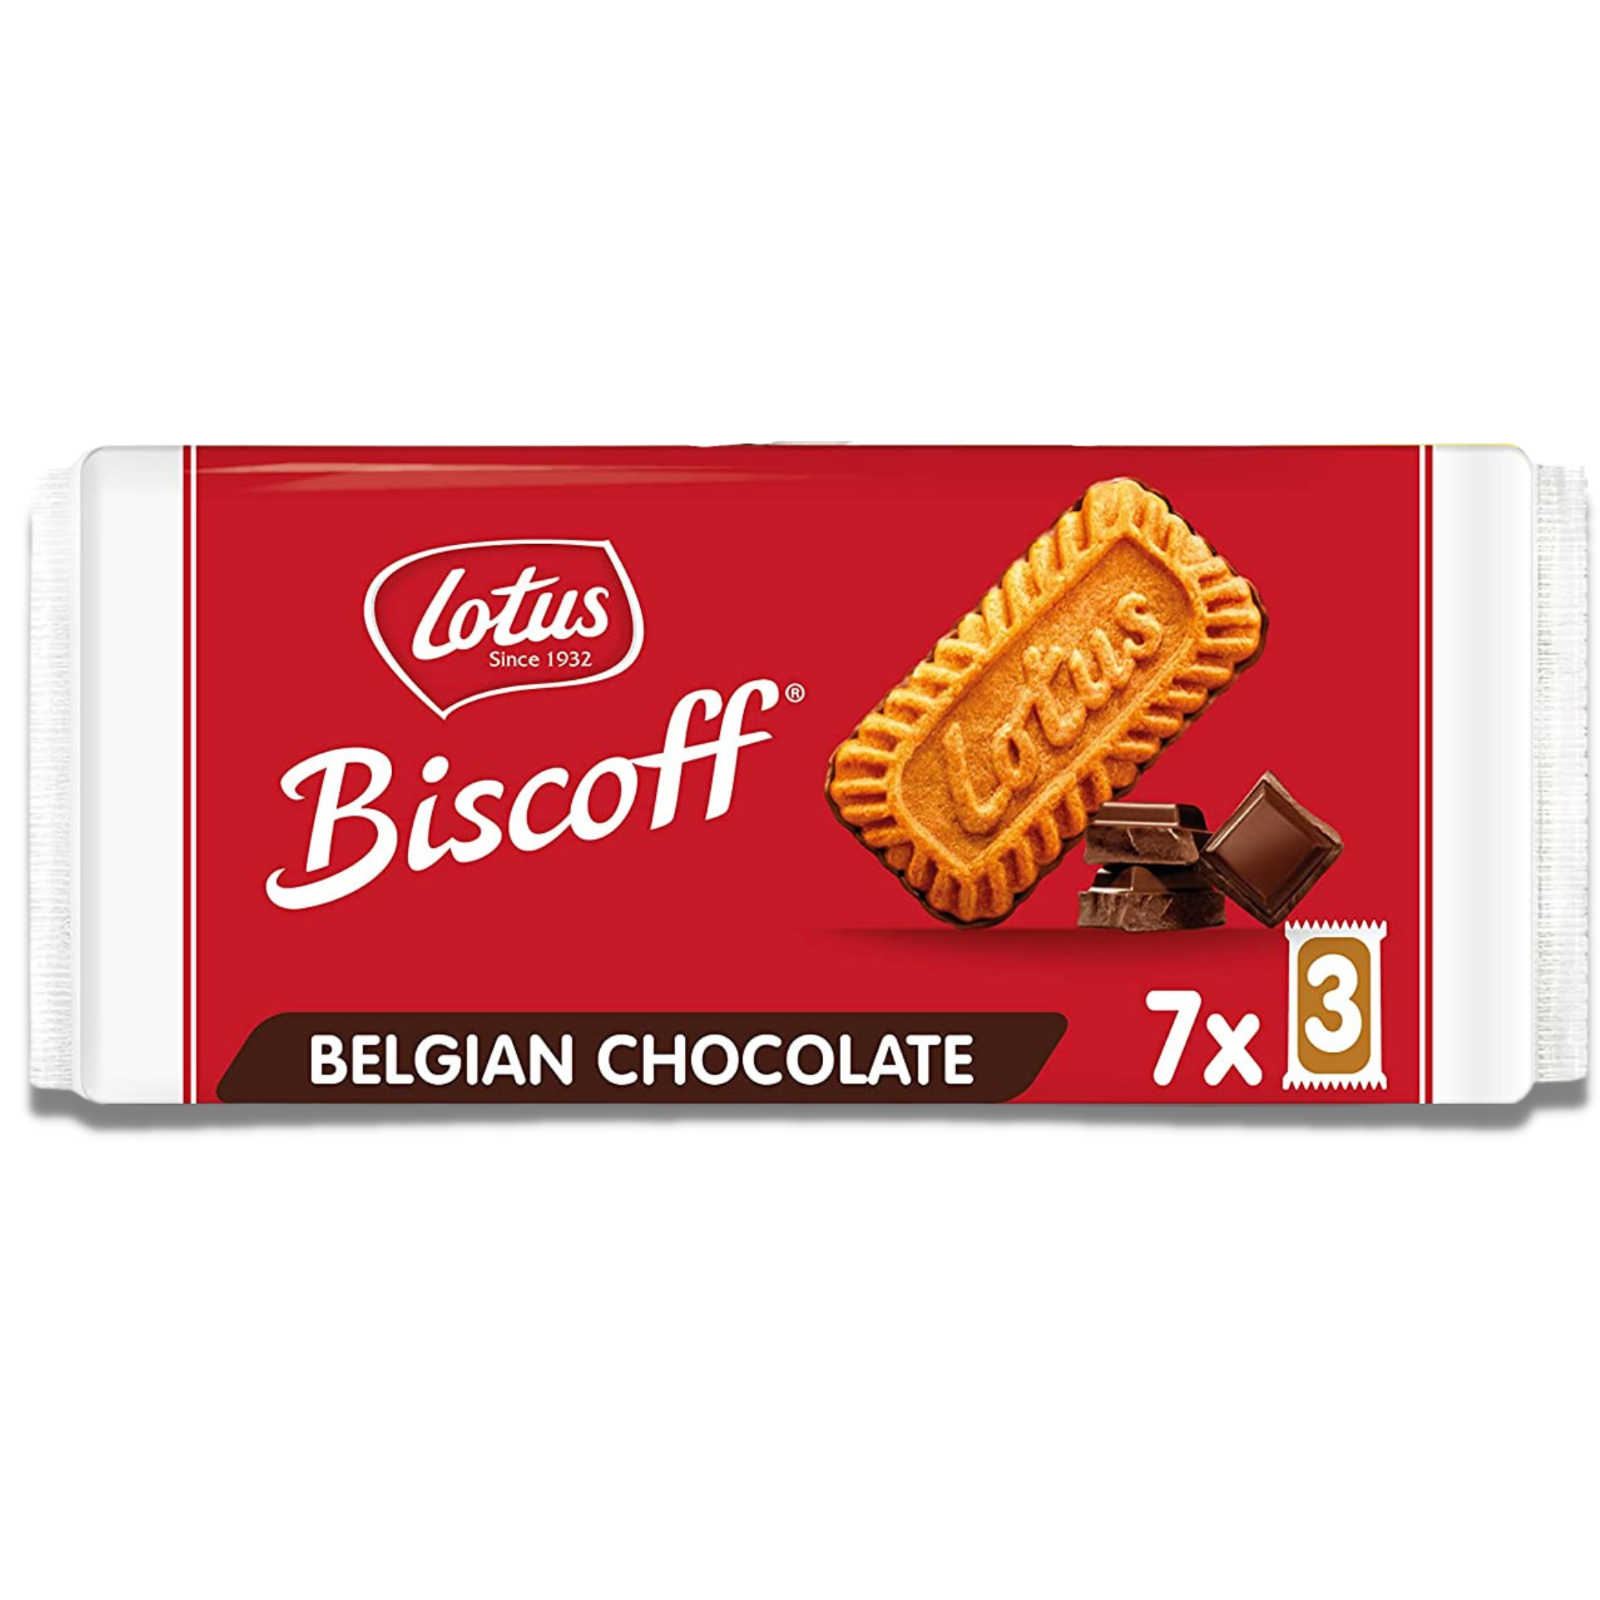 Lotus Biscoff Cookies with Belgian Chocolate - 7 x 3pks - 5.4 Ounce (Pack of 1)